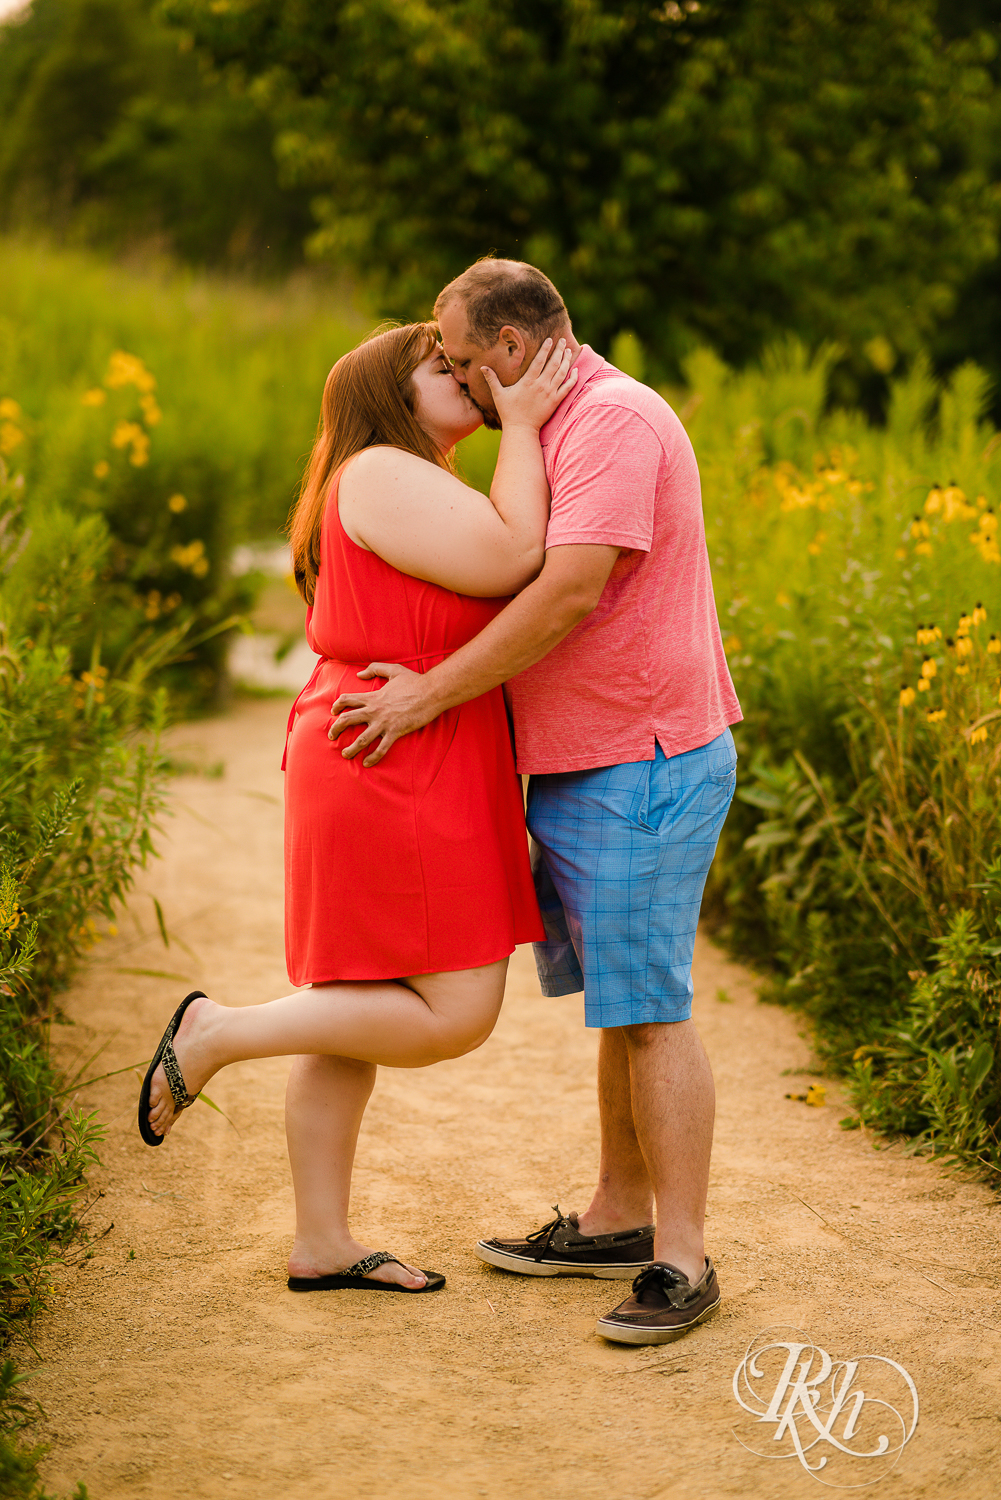 Man and women in orange dress kiss at sunset at Lebanon Hills Regional Park in Eagan, Minnesota.